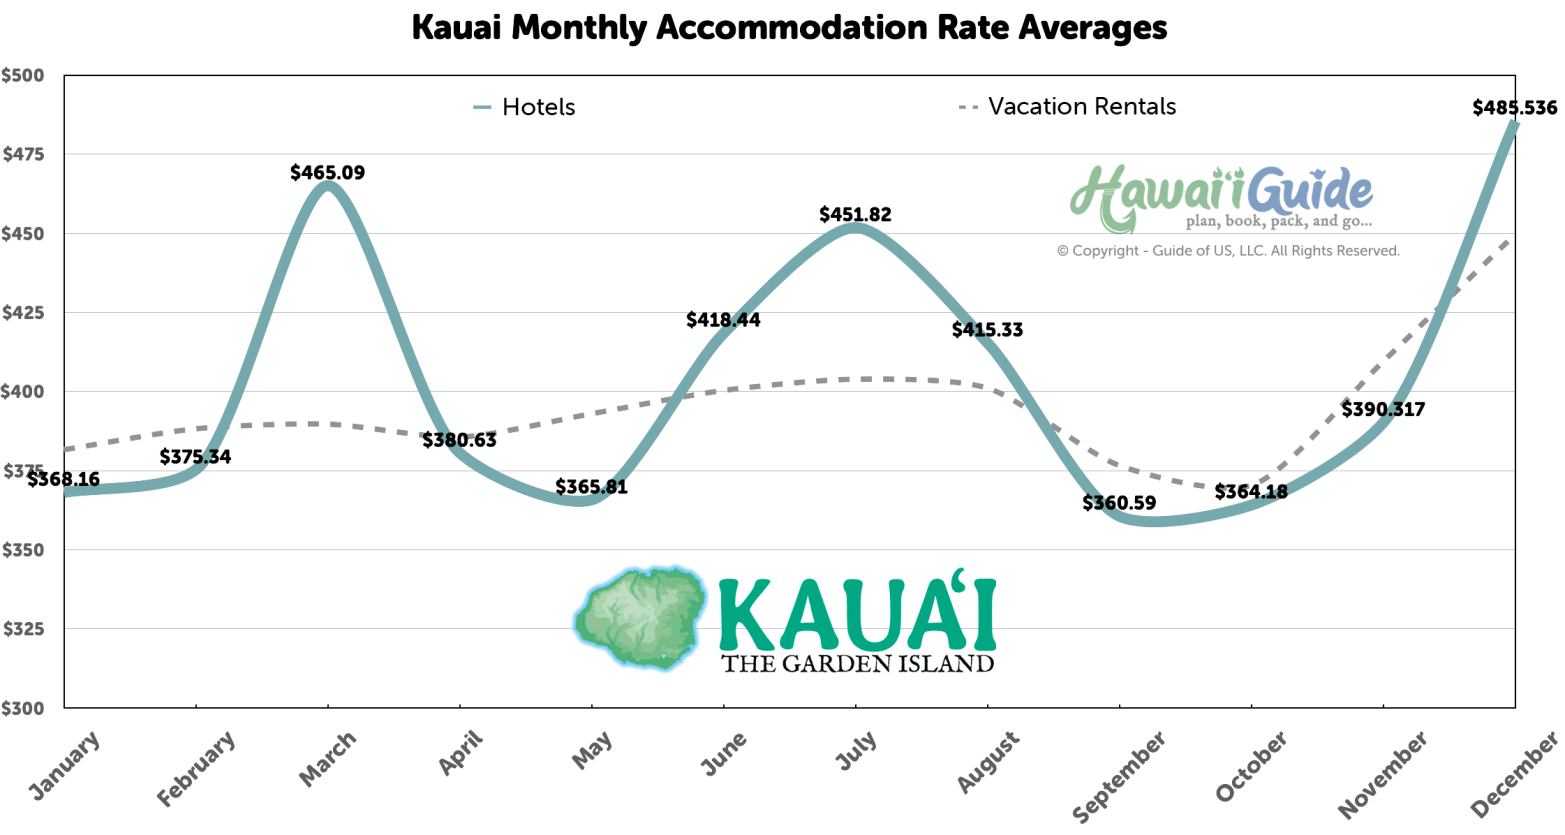 Kauai Accommodation Rate Averages (click to enlarge)